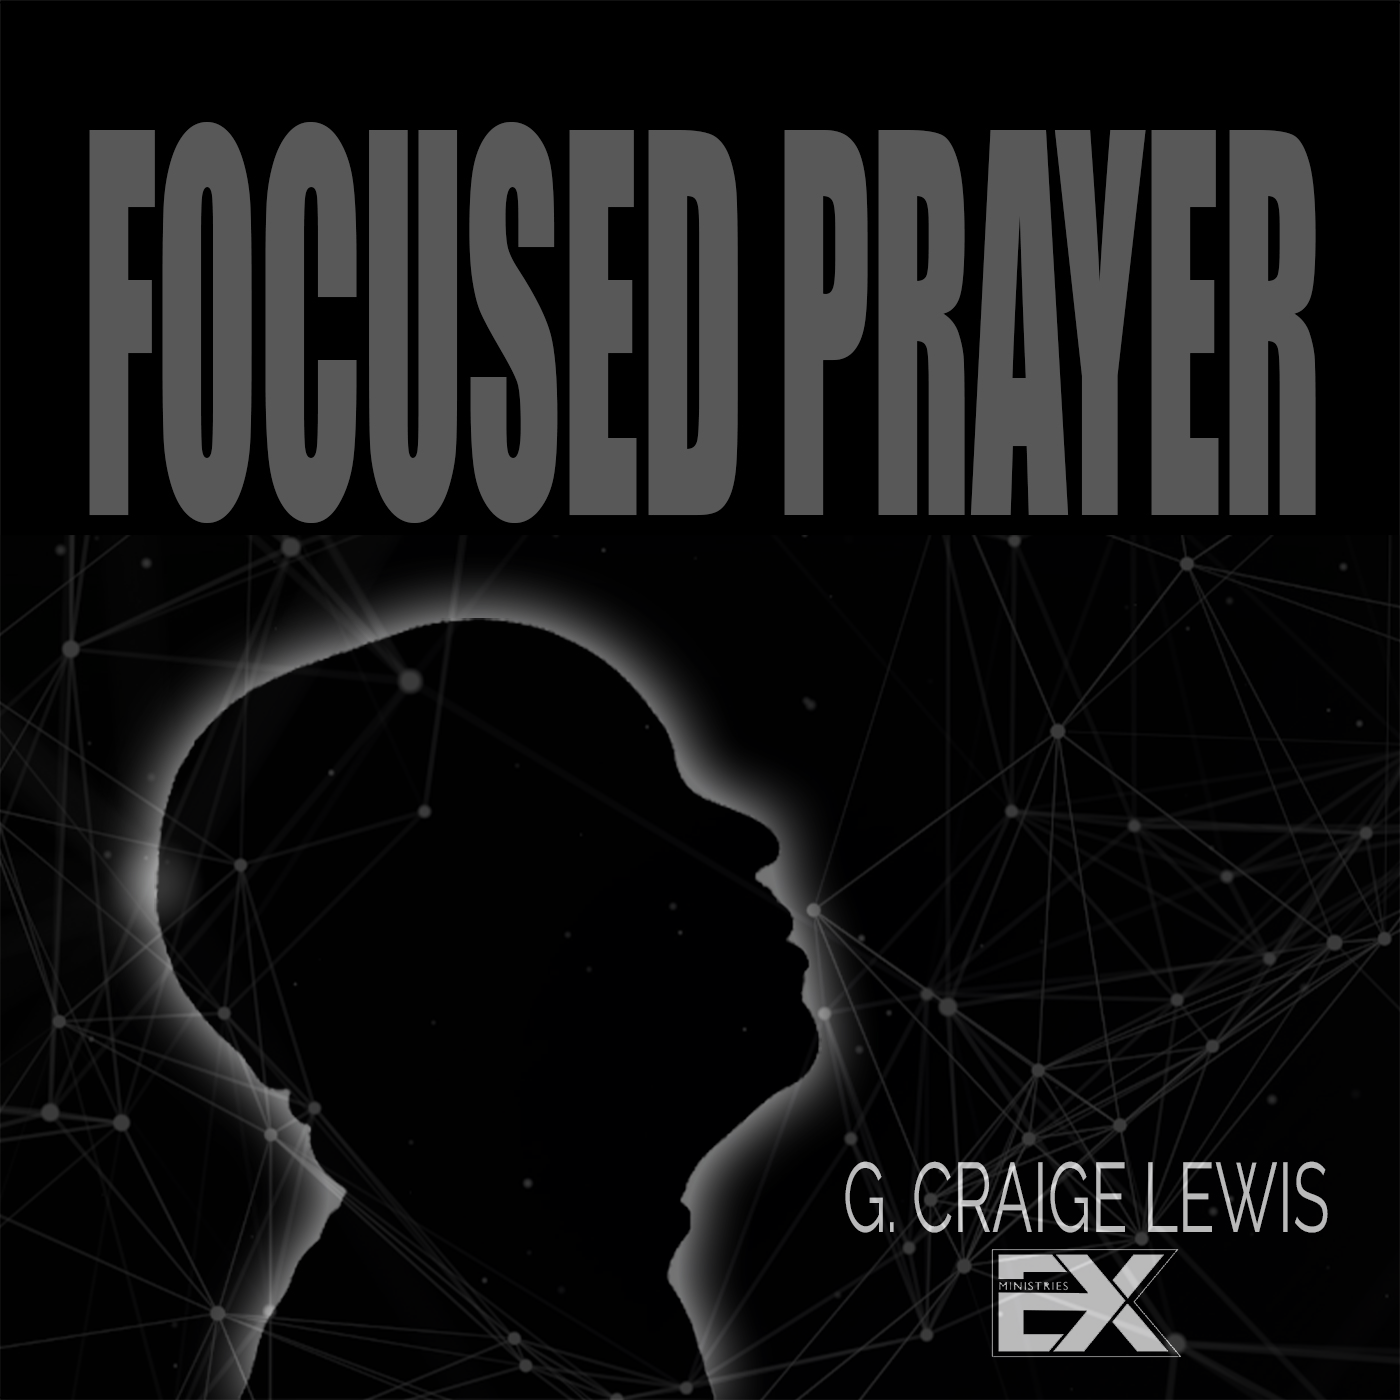 Focused Prayer with G. Craige Lewis Podcast artwork